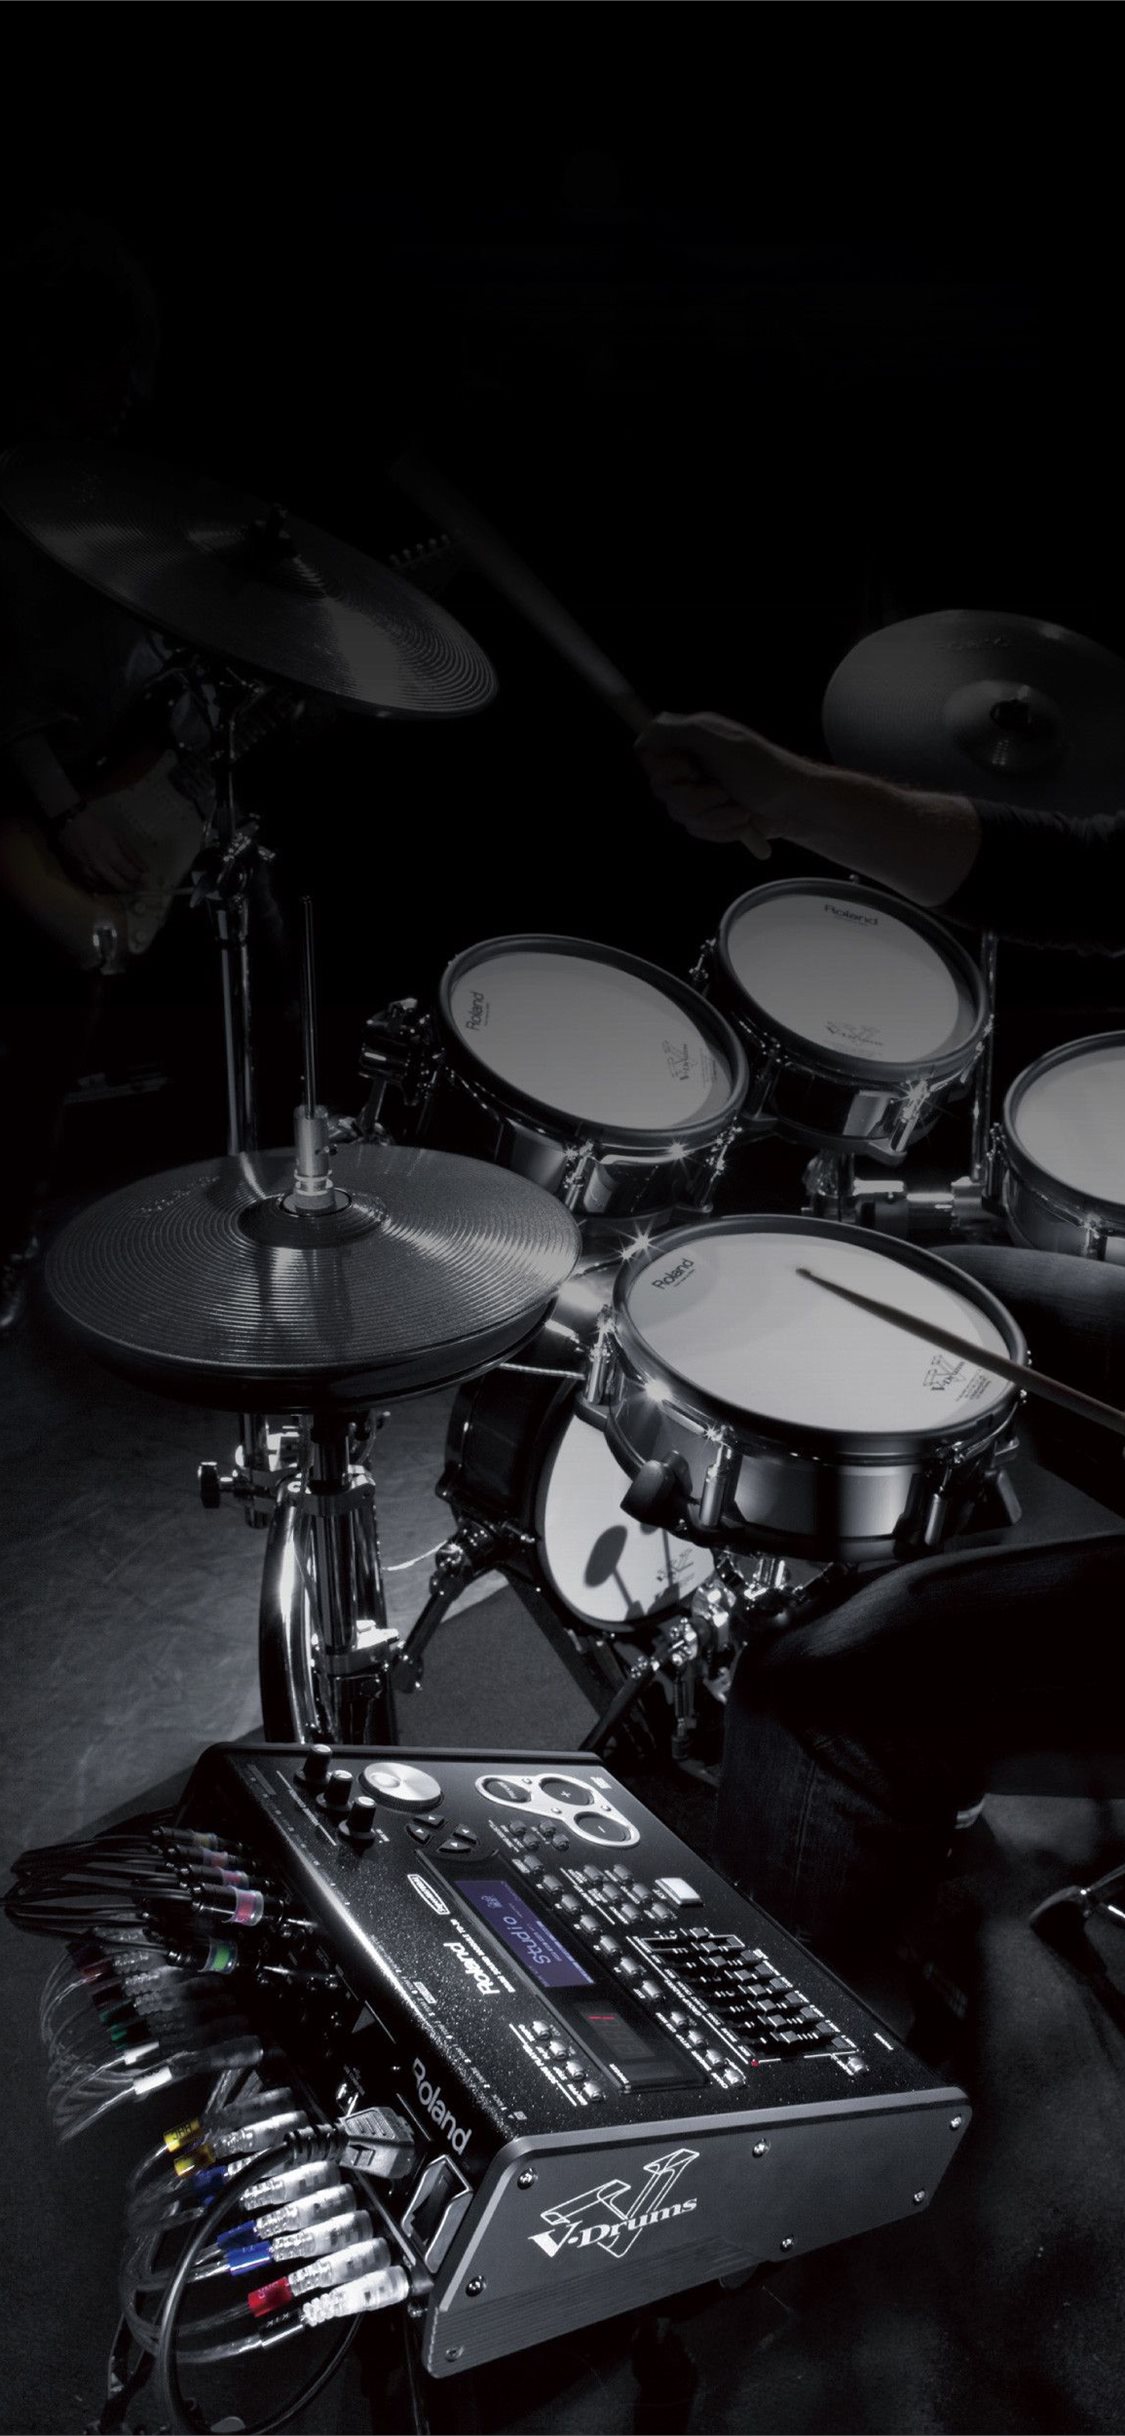 drum kit iPhone Wallpapers Free Download